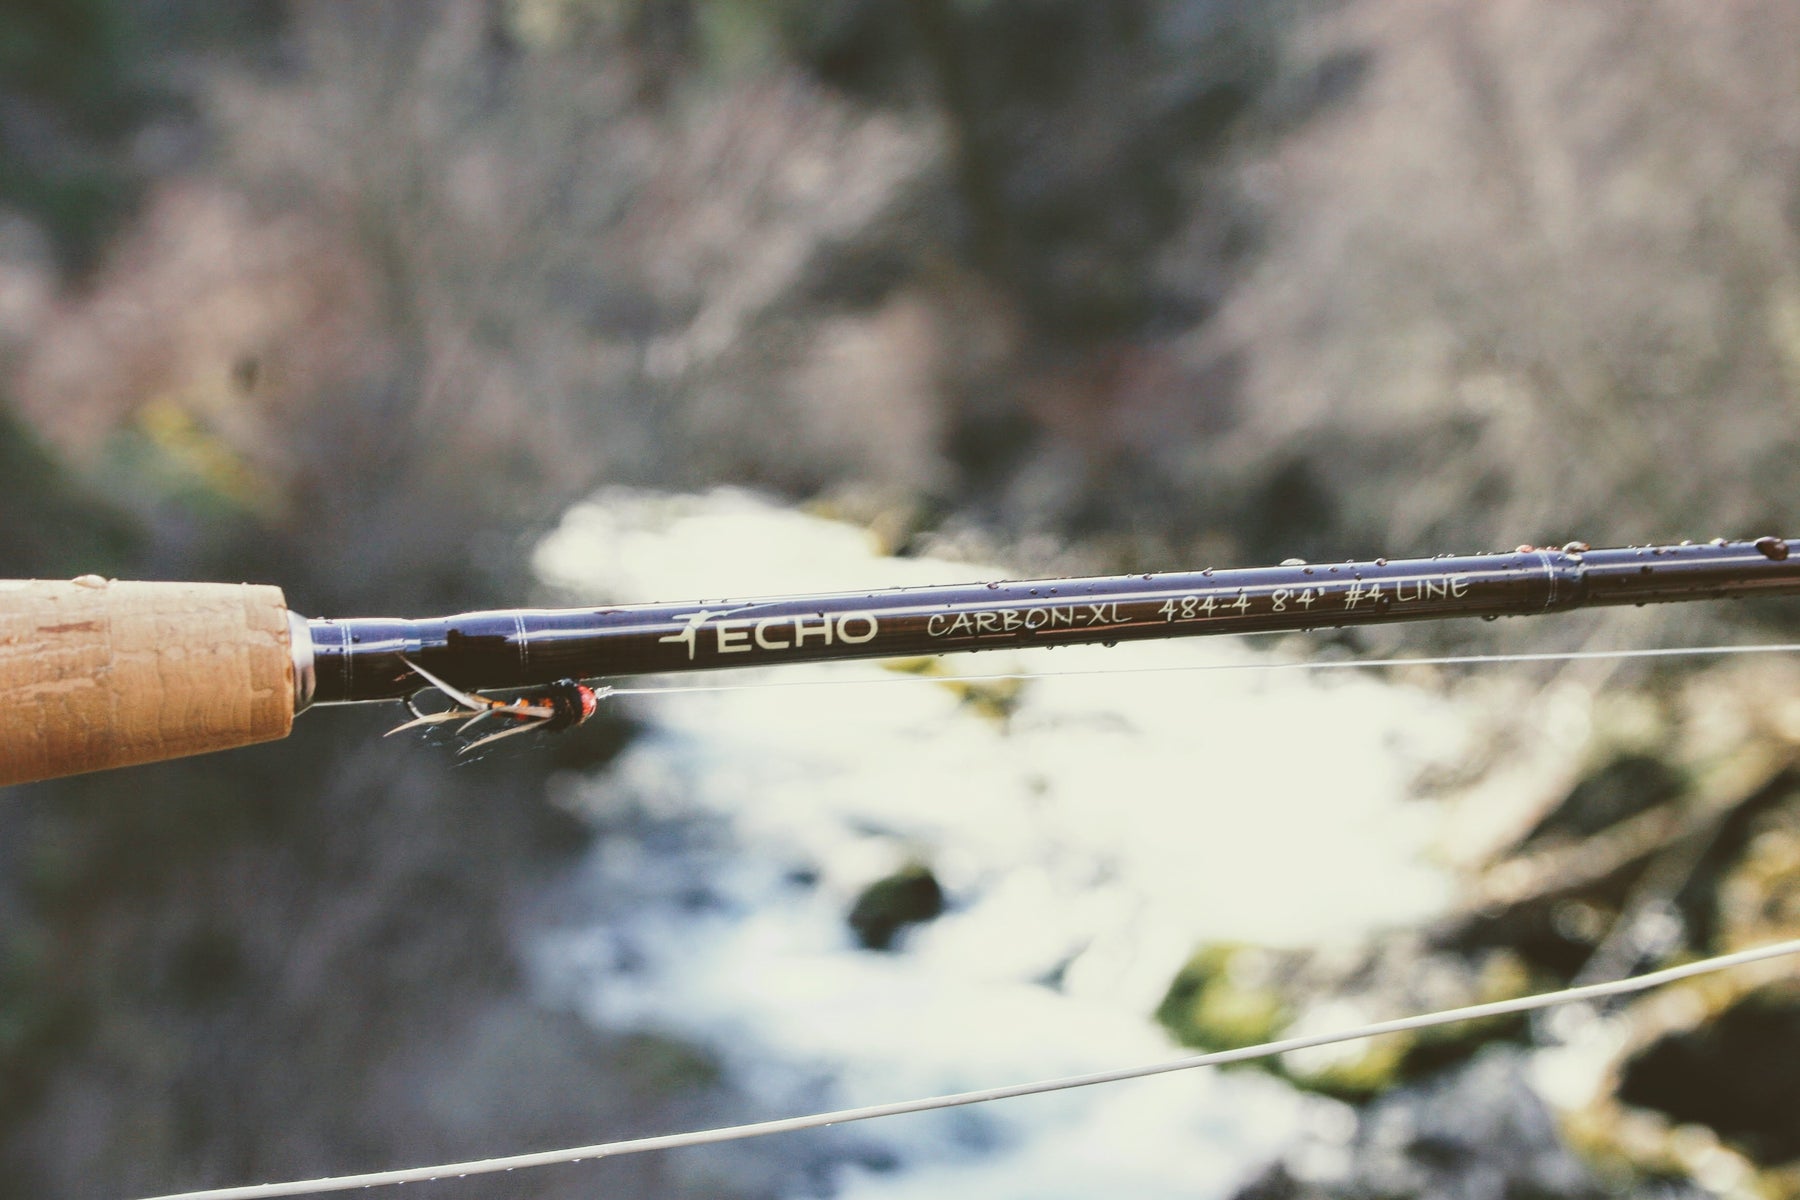 Echo Carbon XL 3wt 7'6 Fly Rod